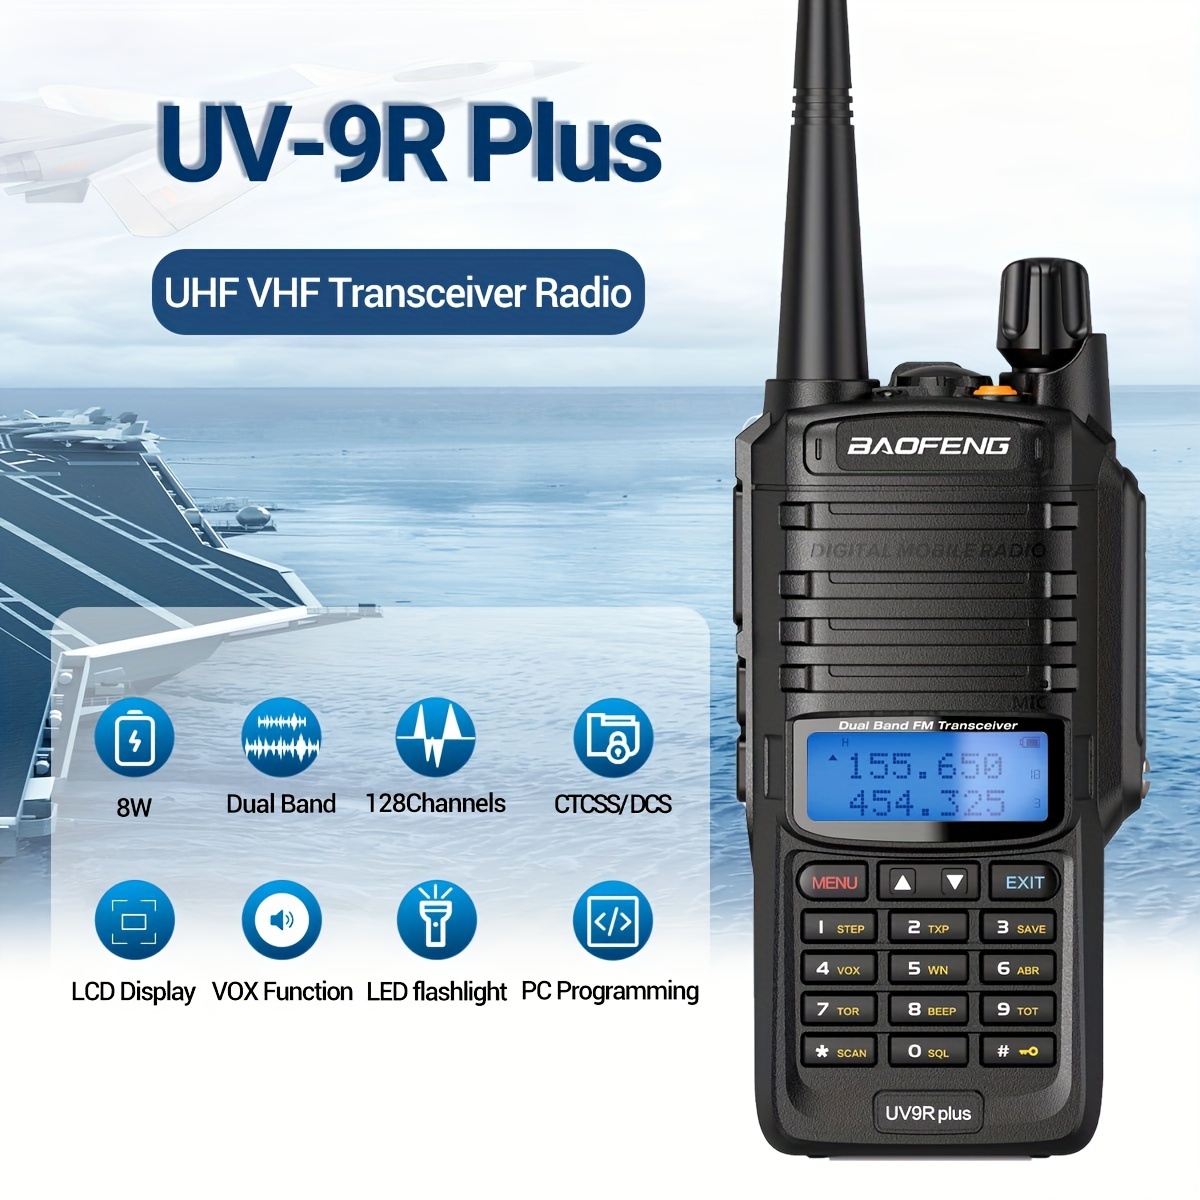 Baofeng UV-9R Plus Dual Band Waterproof Radio Review – The Best